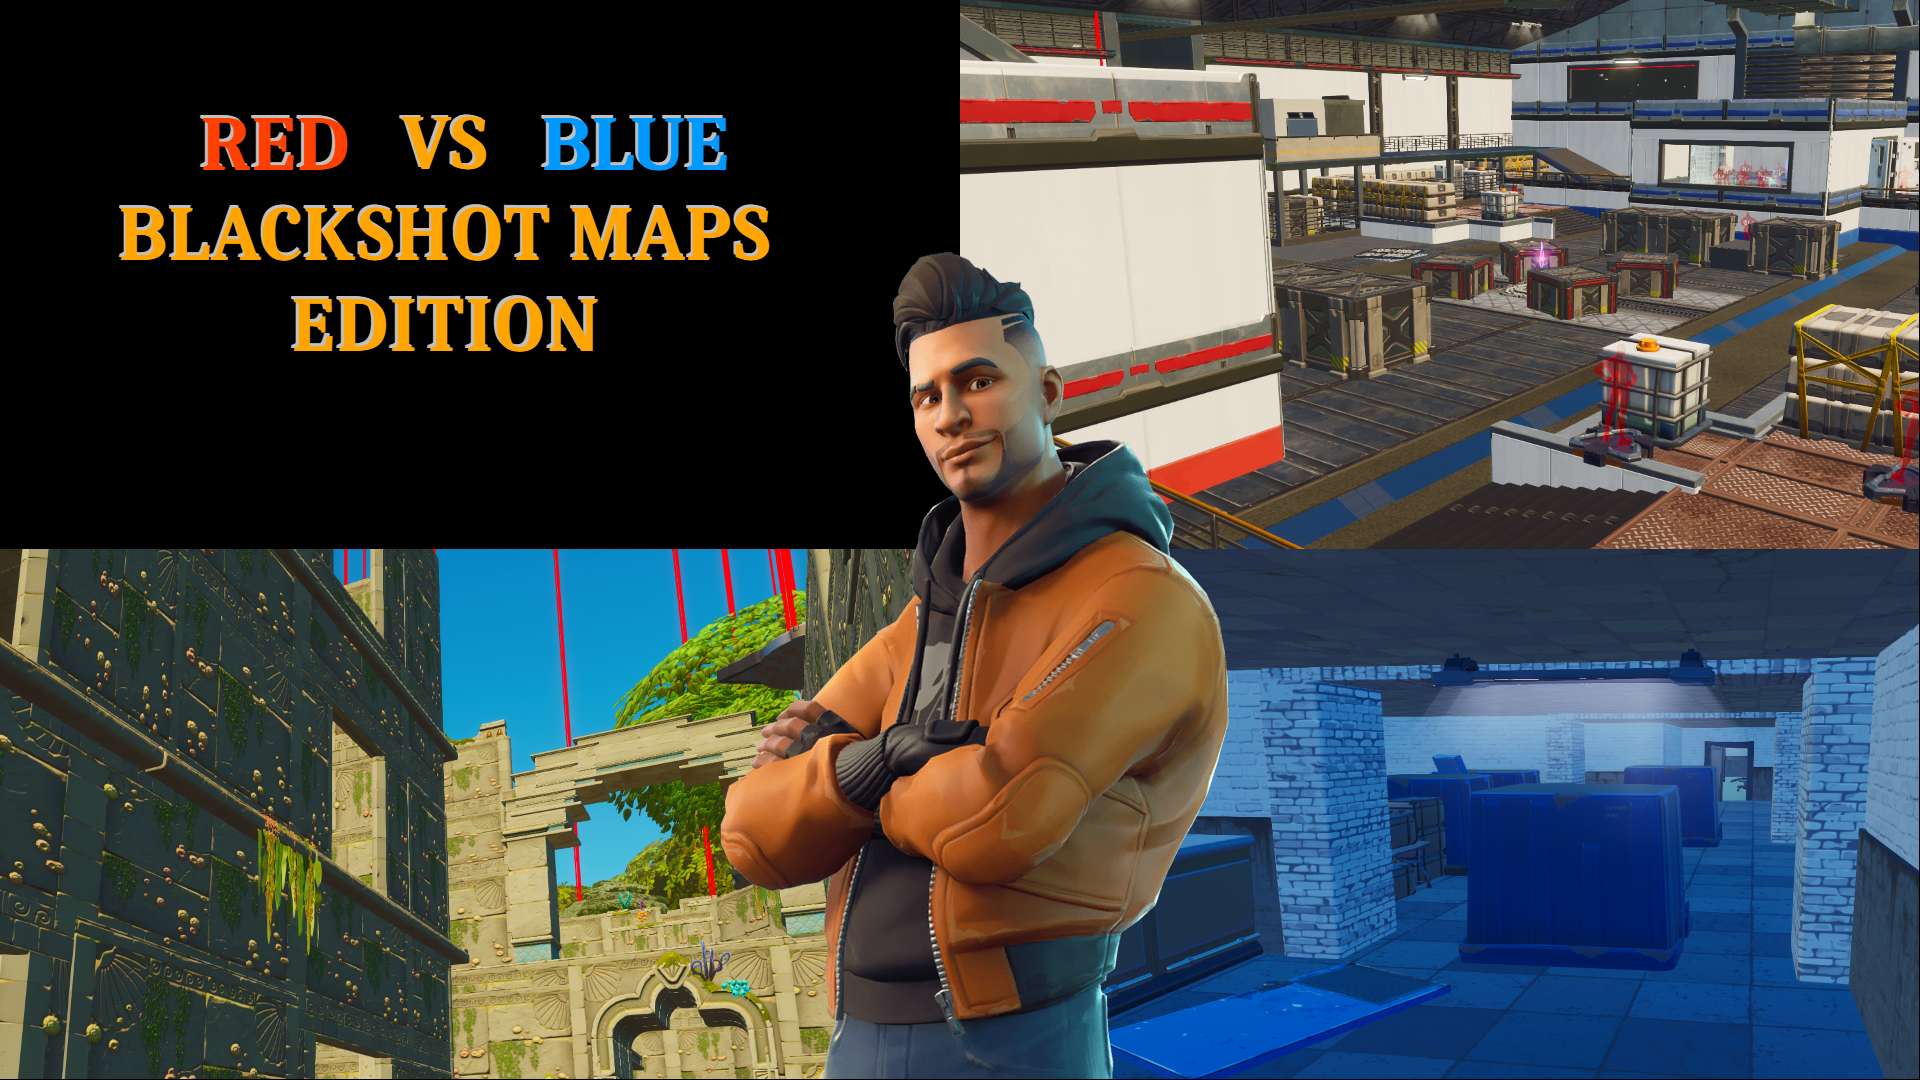 Red VS Blue Blackshot maps edition